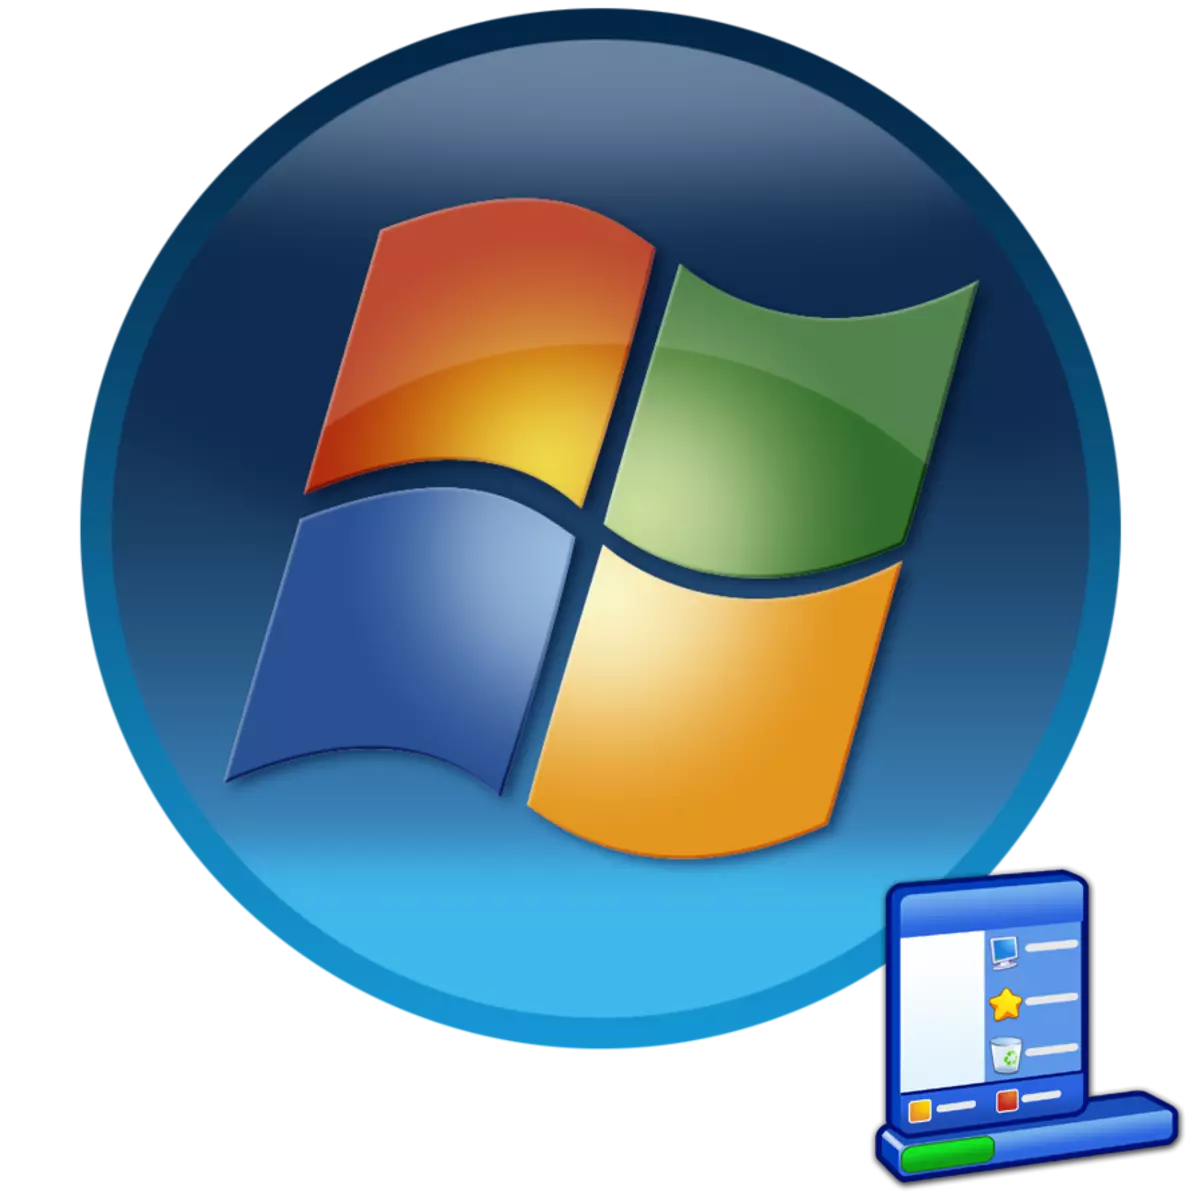 Beddel boosteejka ee Windows 7